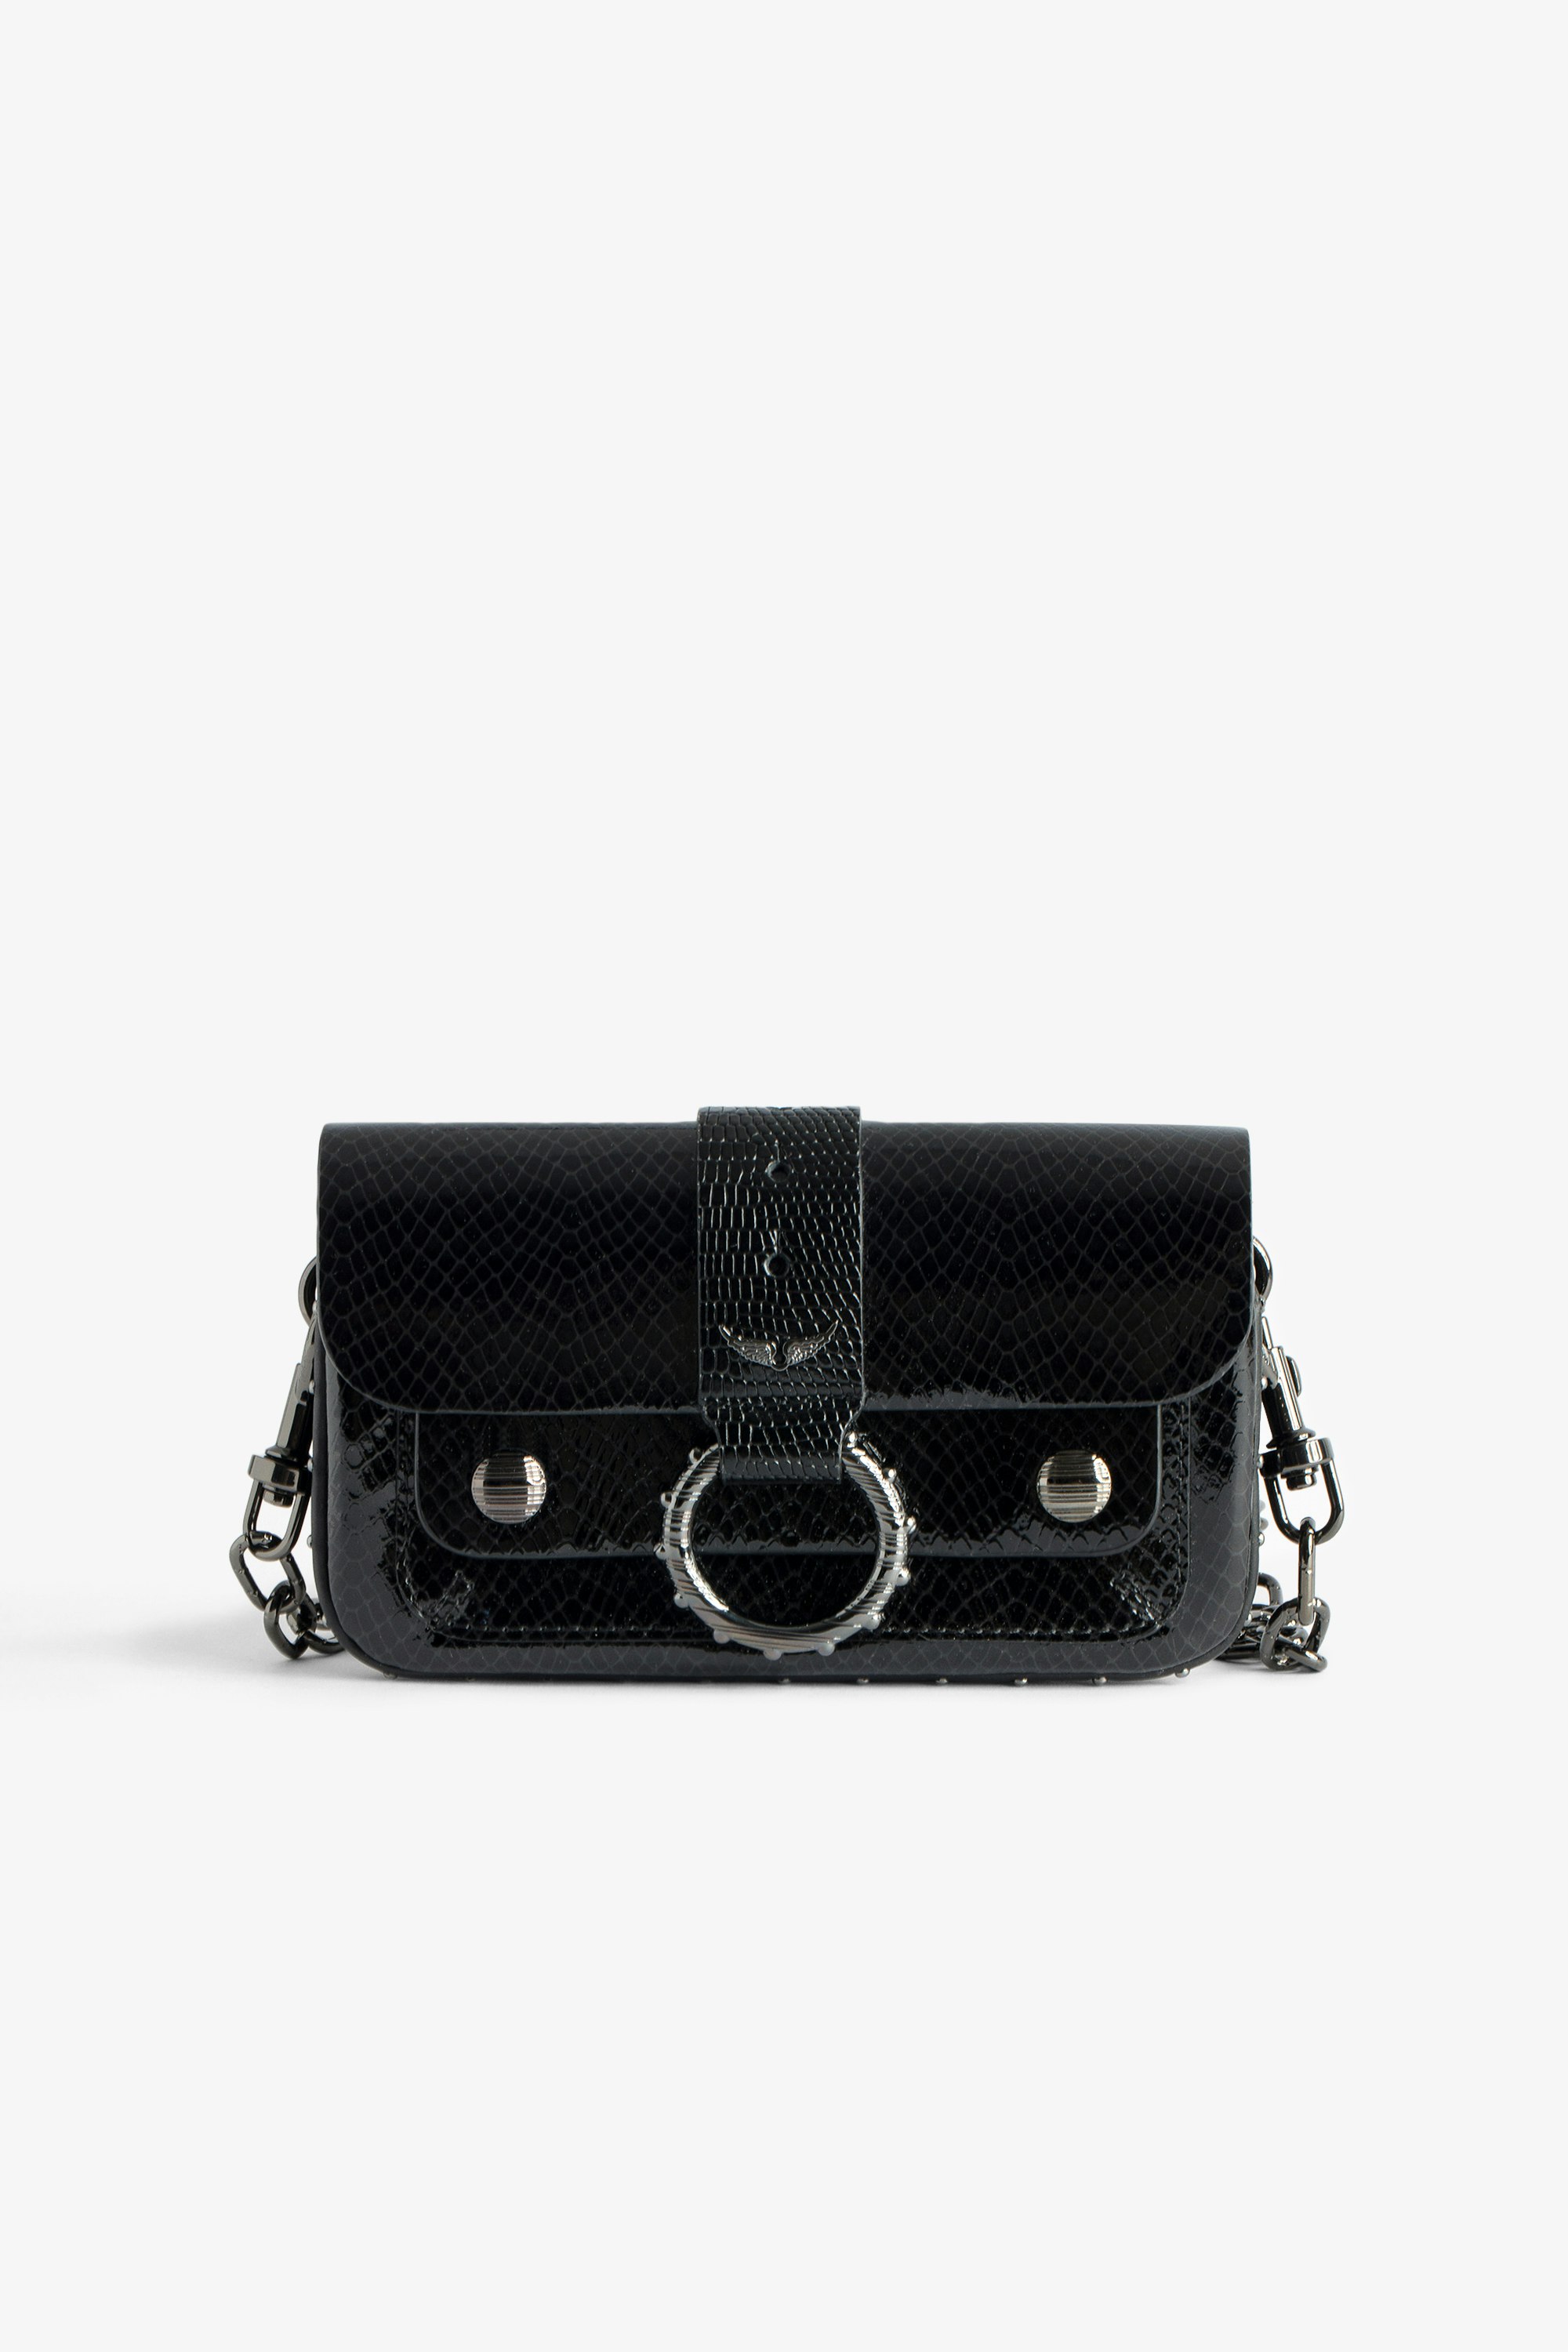 Sac Kate Wallet Glossy Wild Embossé - Mini sac en cuir embossé brillant noir effet iguane à chaîne en métal.